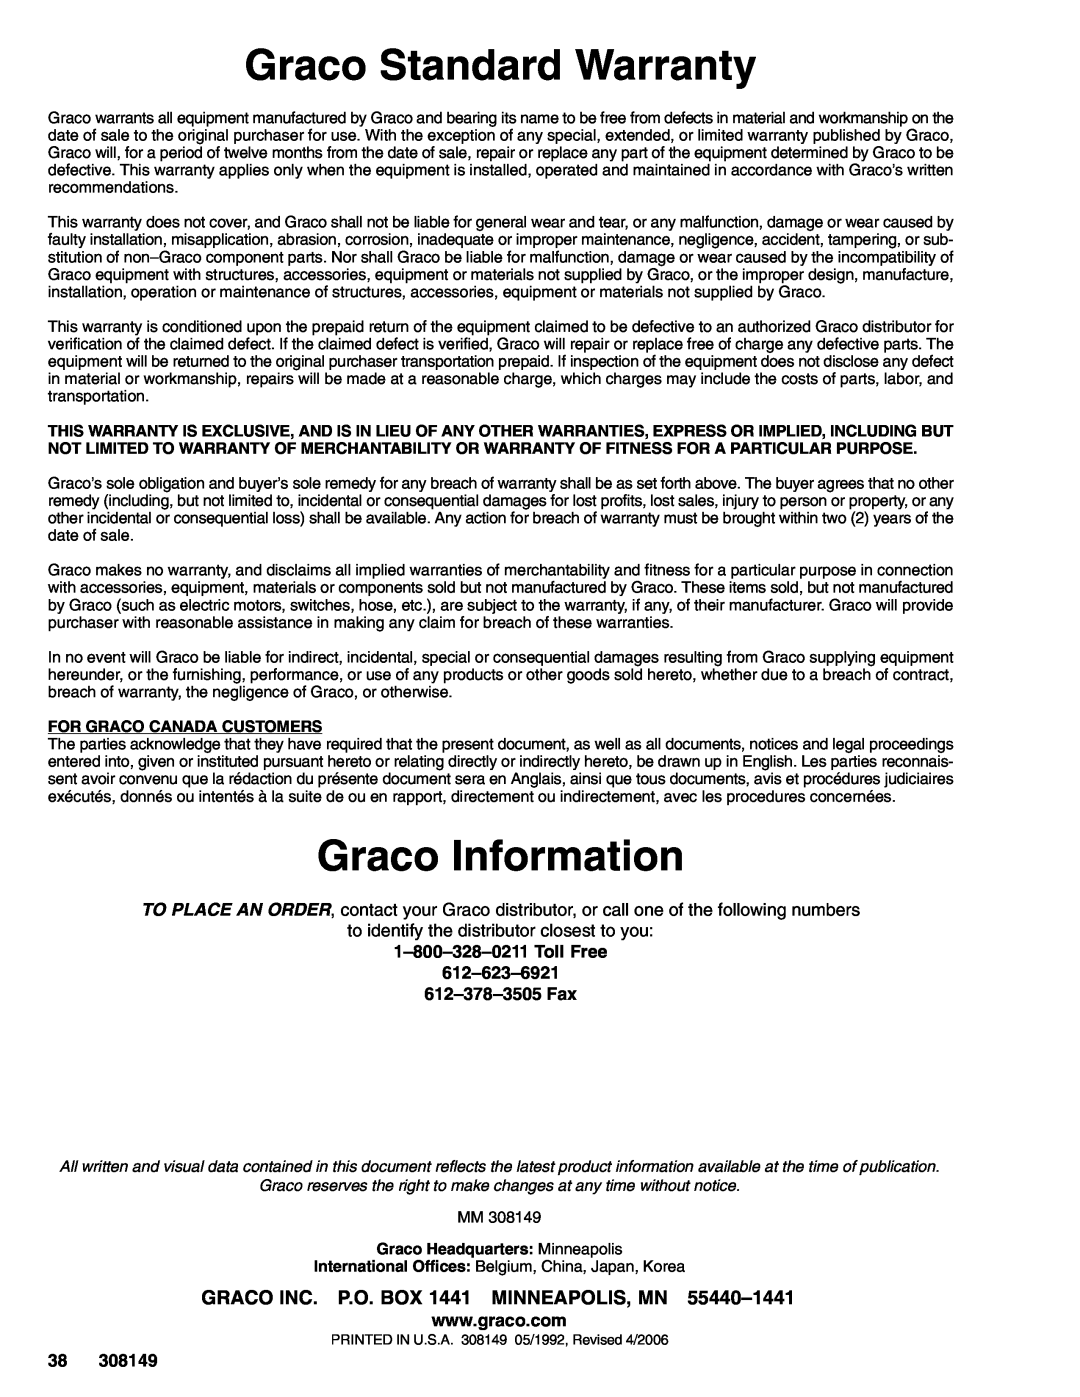 Graco 308149P Graco Standard Warranty, Graco Information, For Graco Canada Customers, Graco Headquarters Minneapolis 